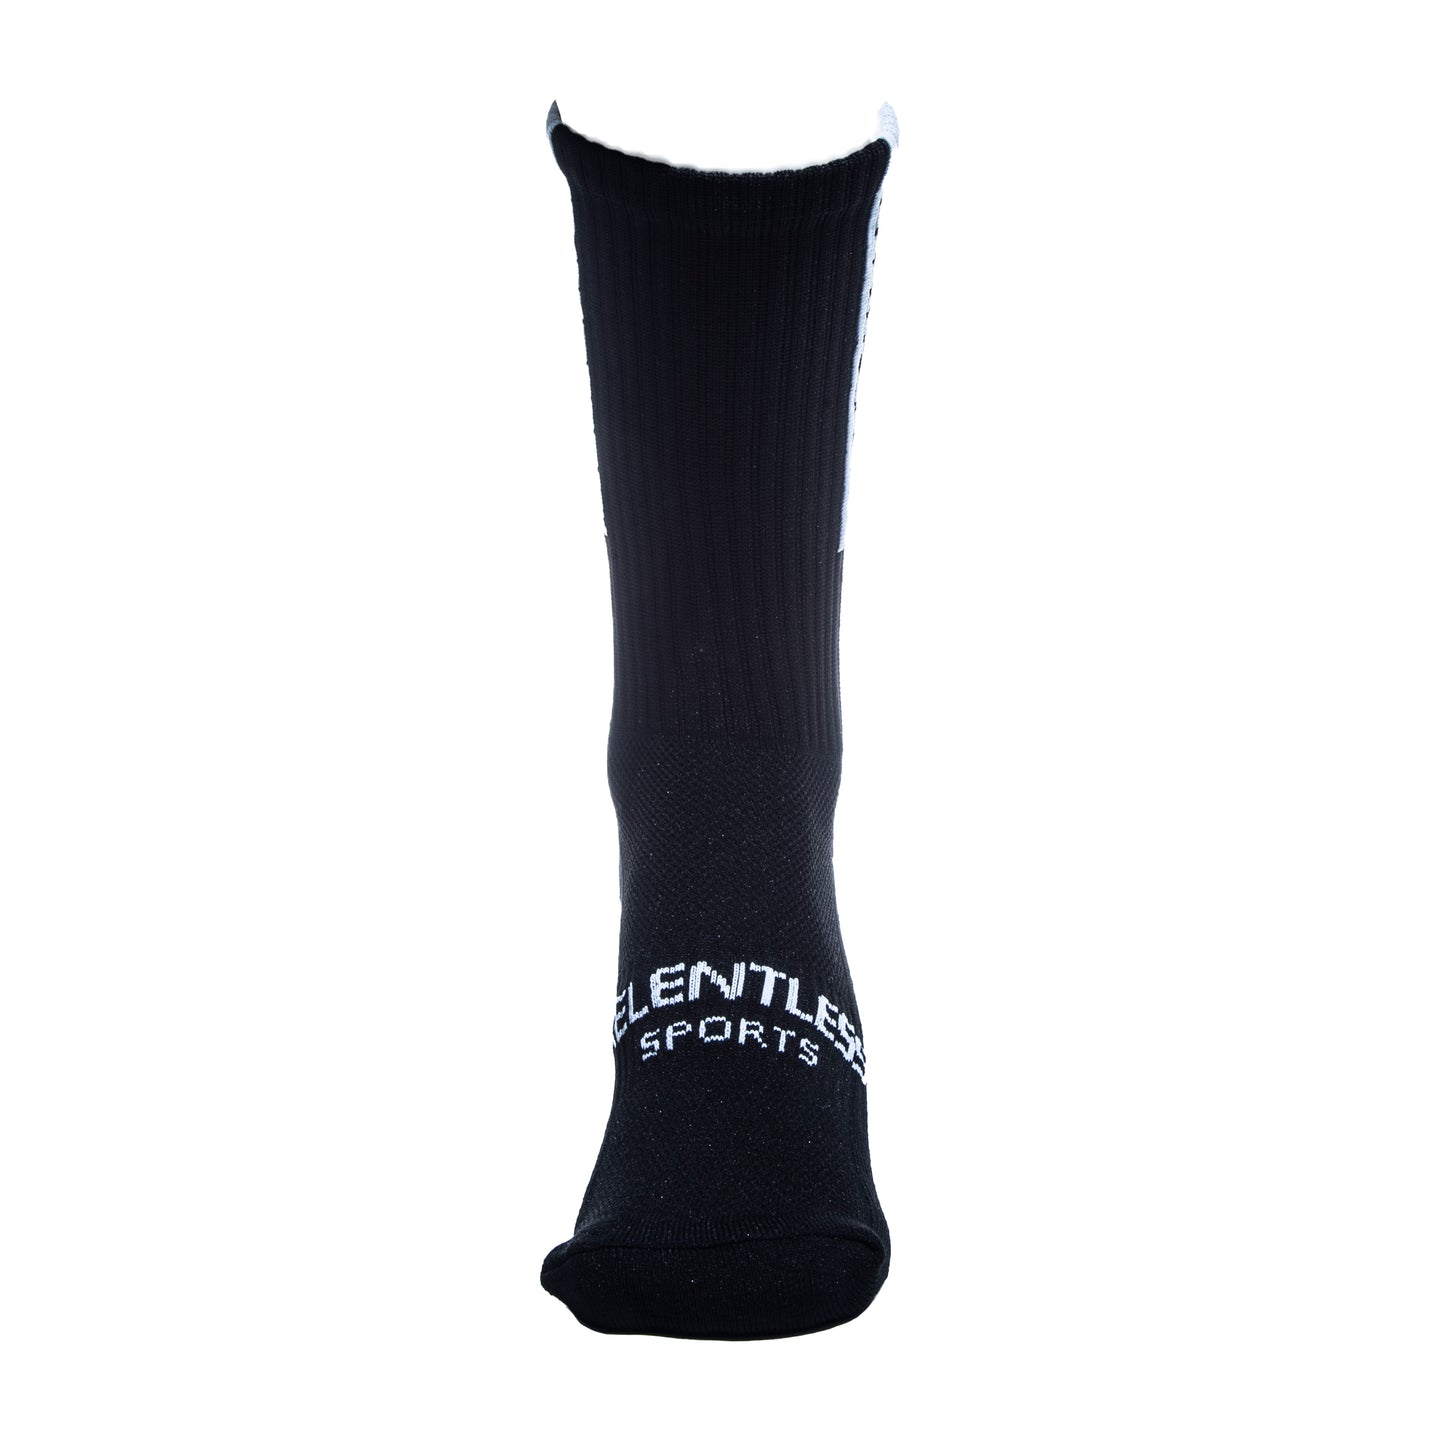 Relentless Grip Sock - Black